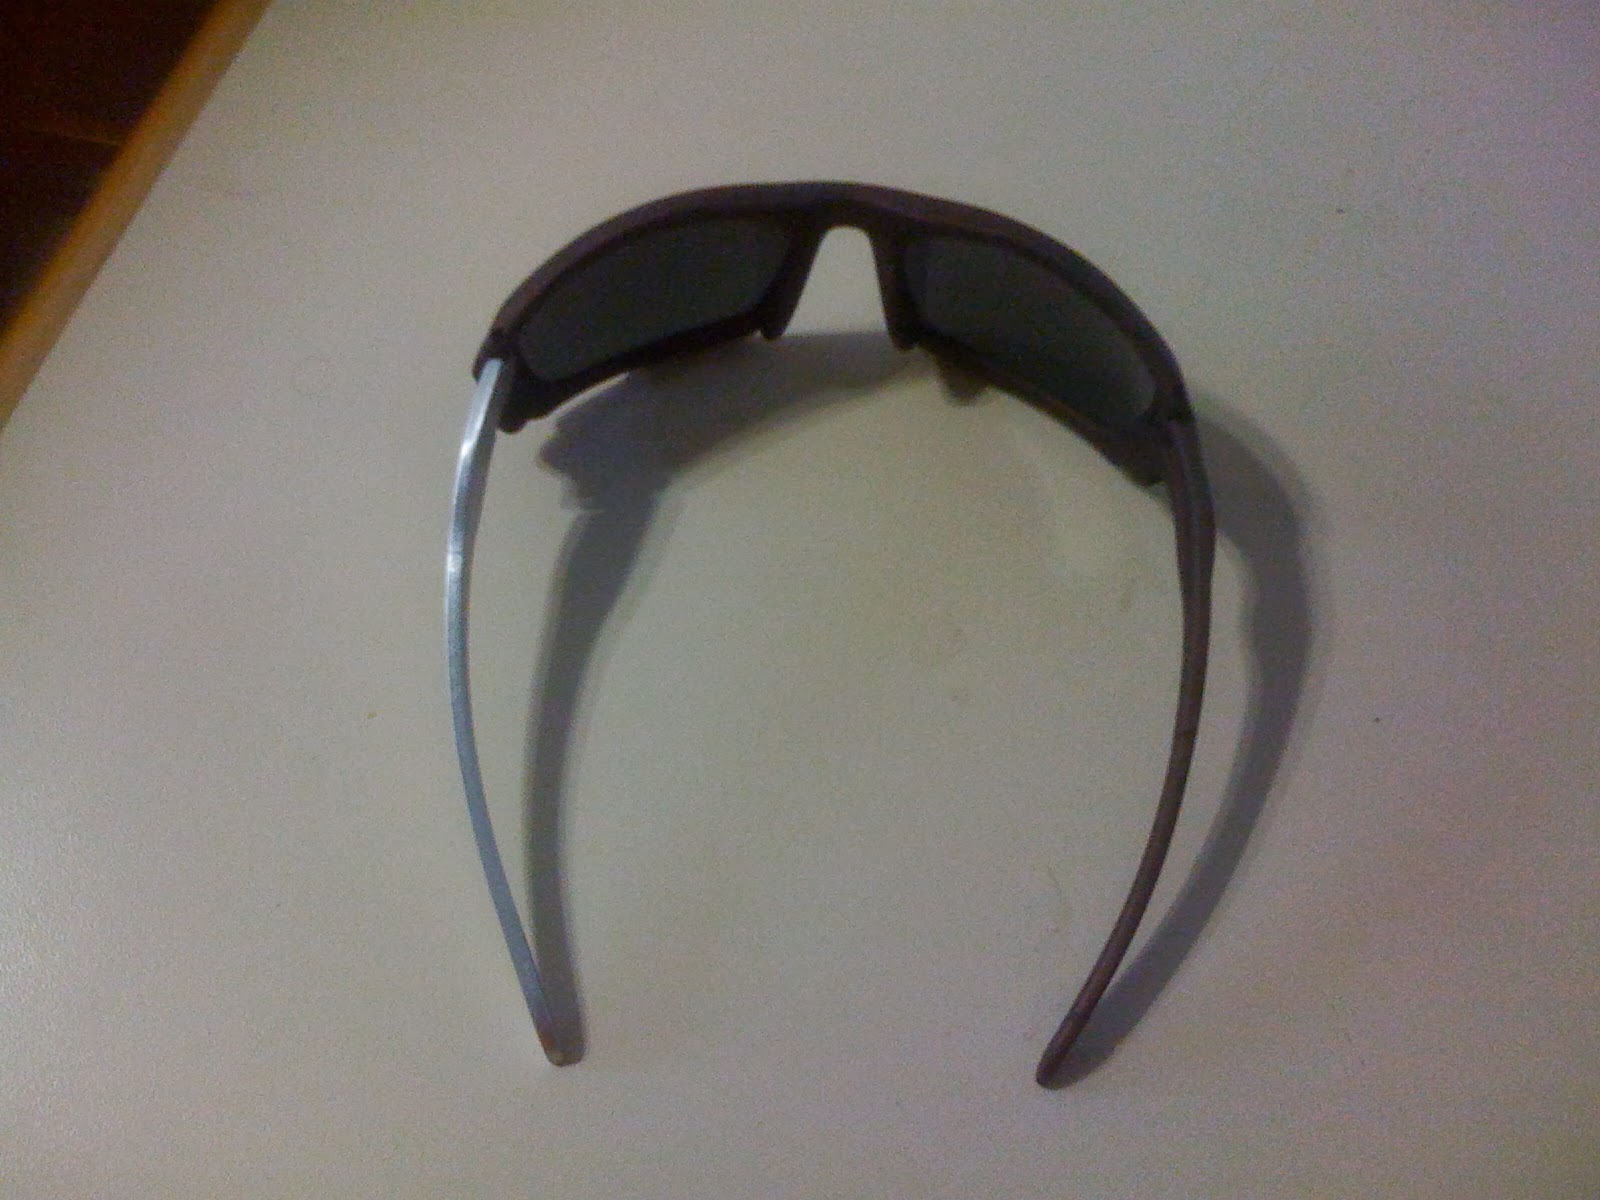 Service On Site: Oakley Sunglasses Arm Repair